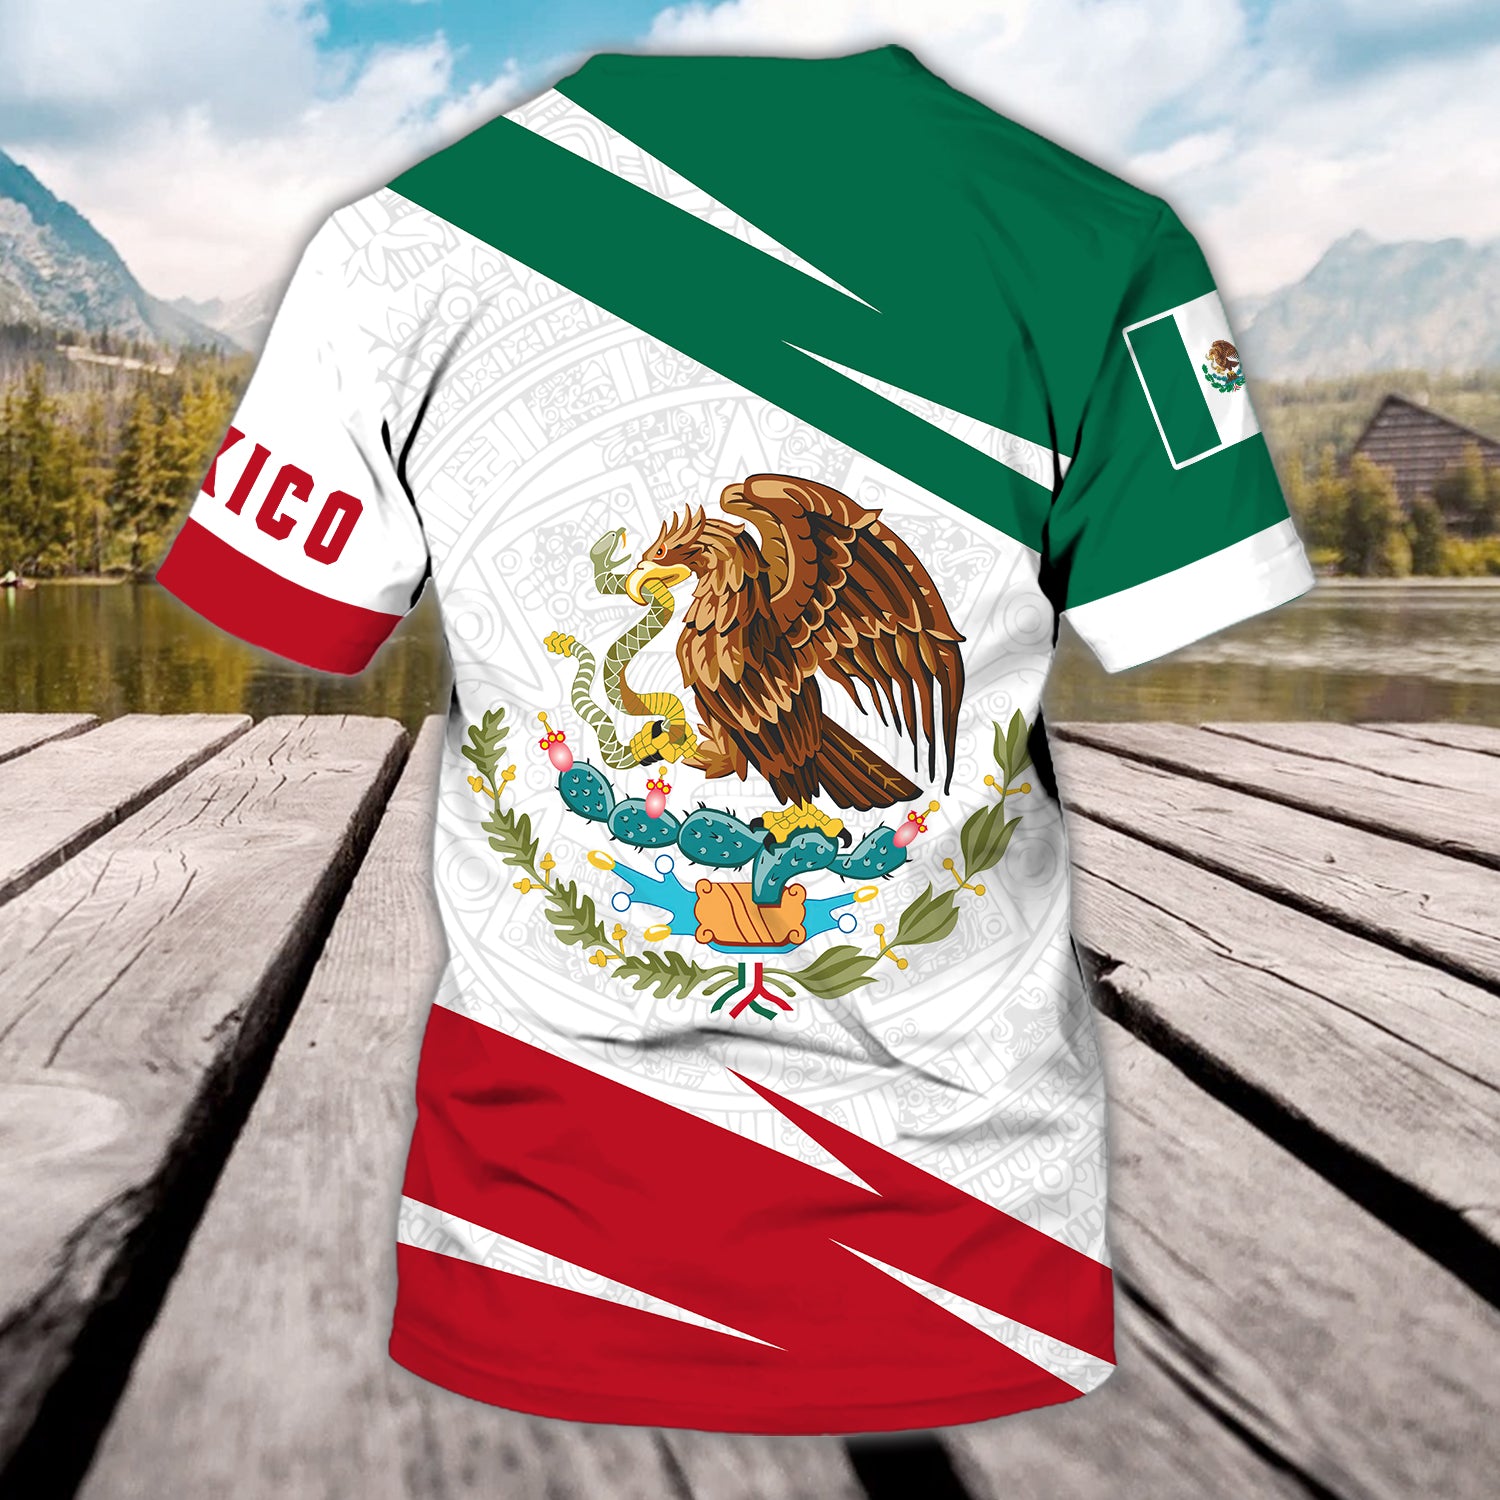 Mexico - Personalized Name 3D Tshirt 22 - Nvc97